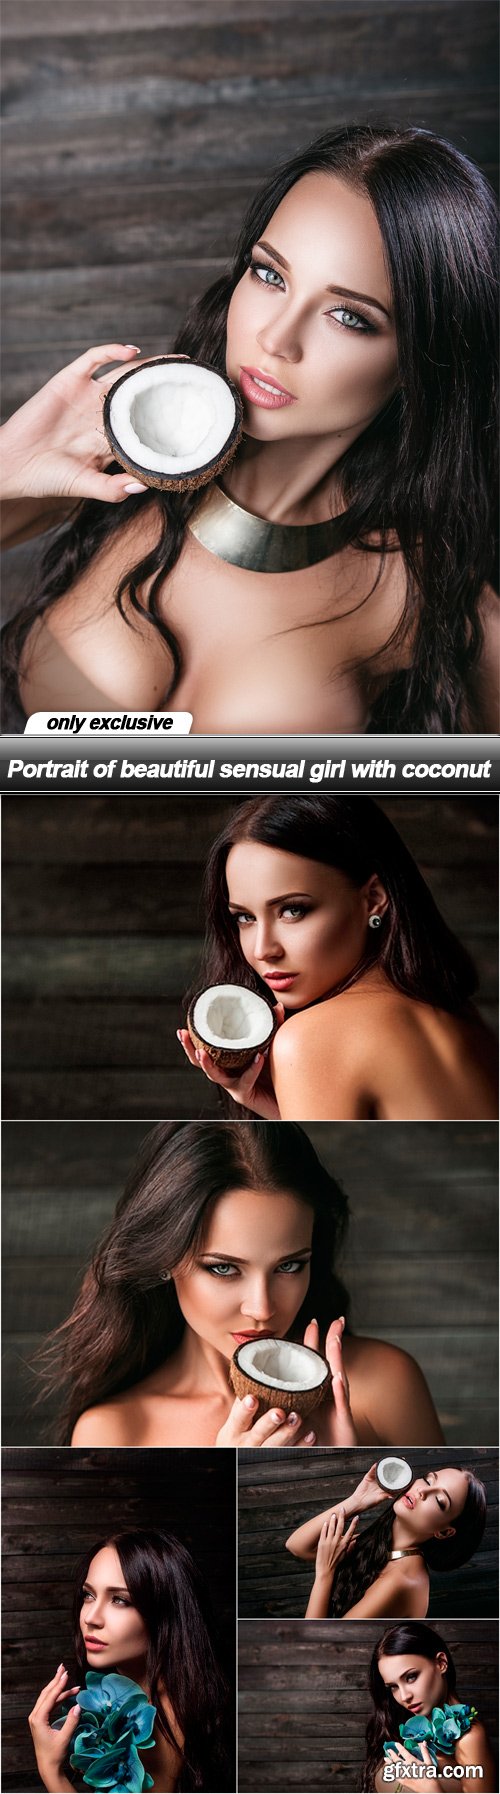 Portrait of beautiful sensual girl with coconut - 6 UHQ JPEG